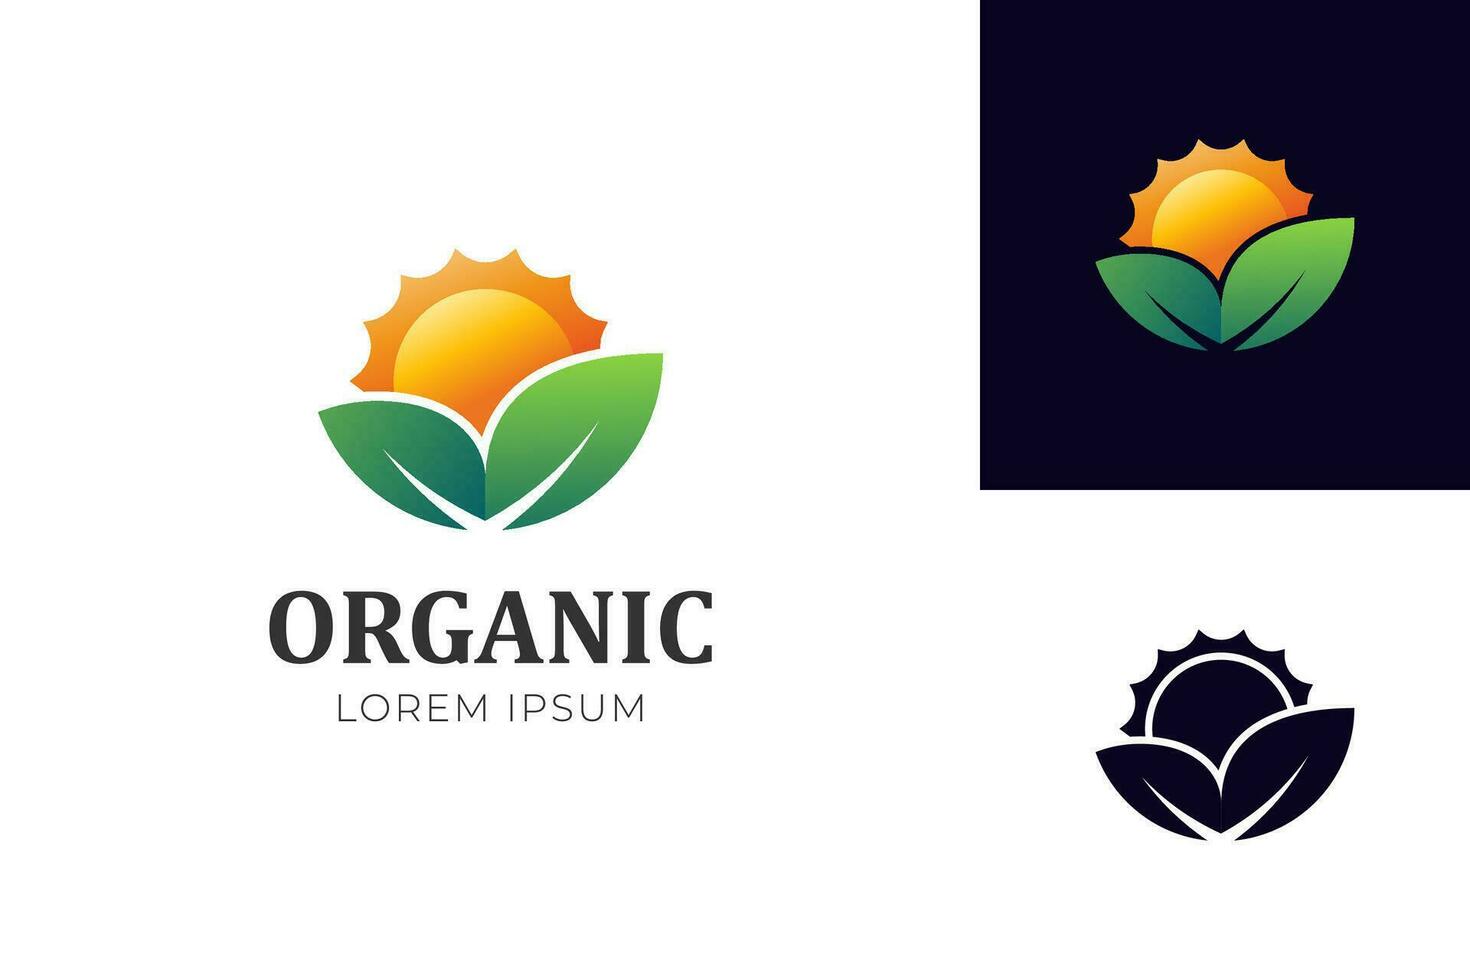 sun rise leaf logo icon design for Alternative Energy concept. Eco organic green Farm natural fresh products vector